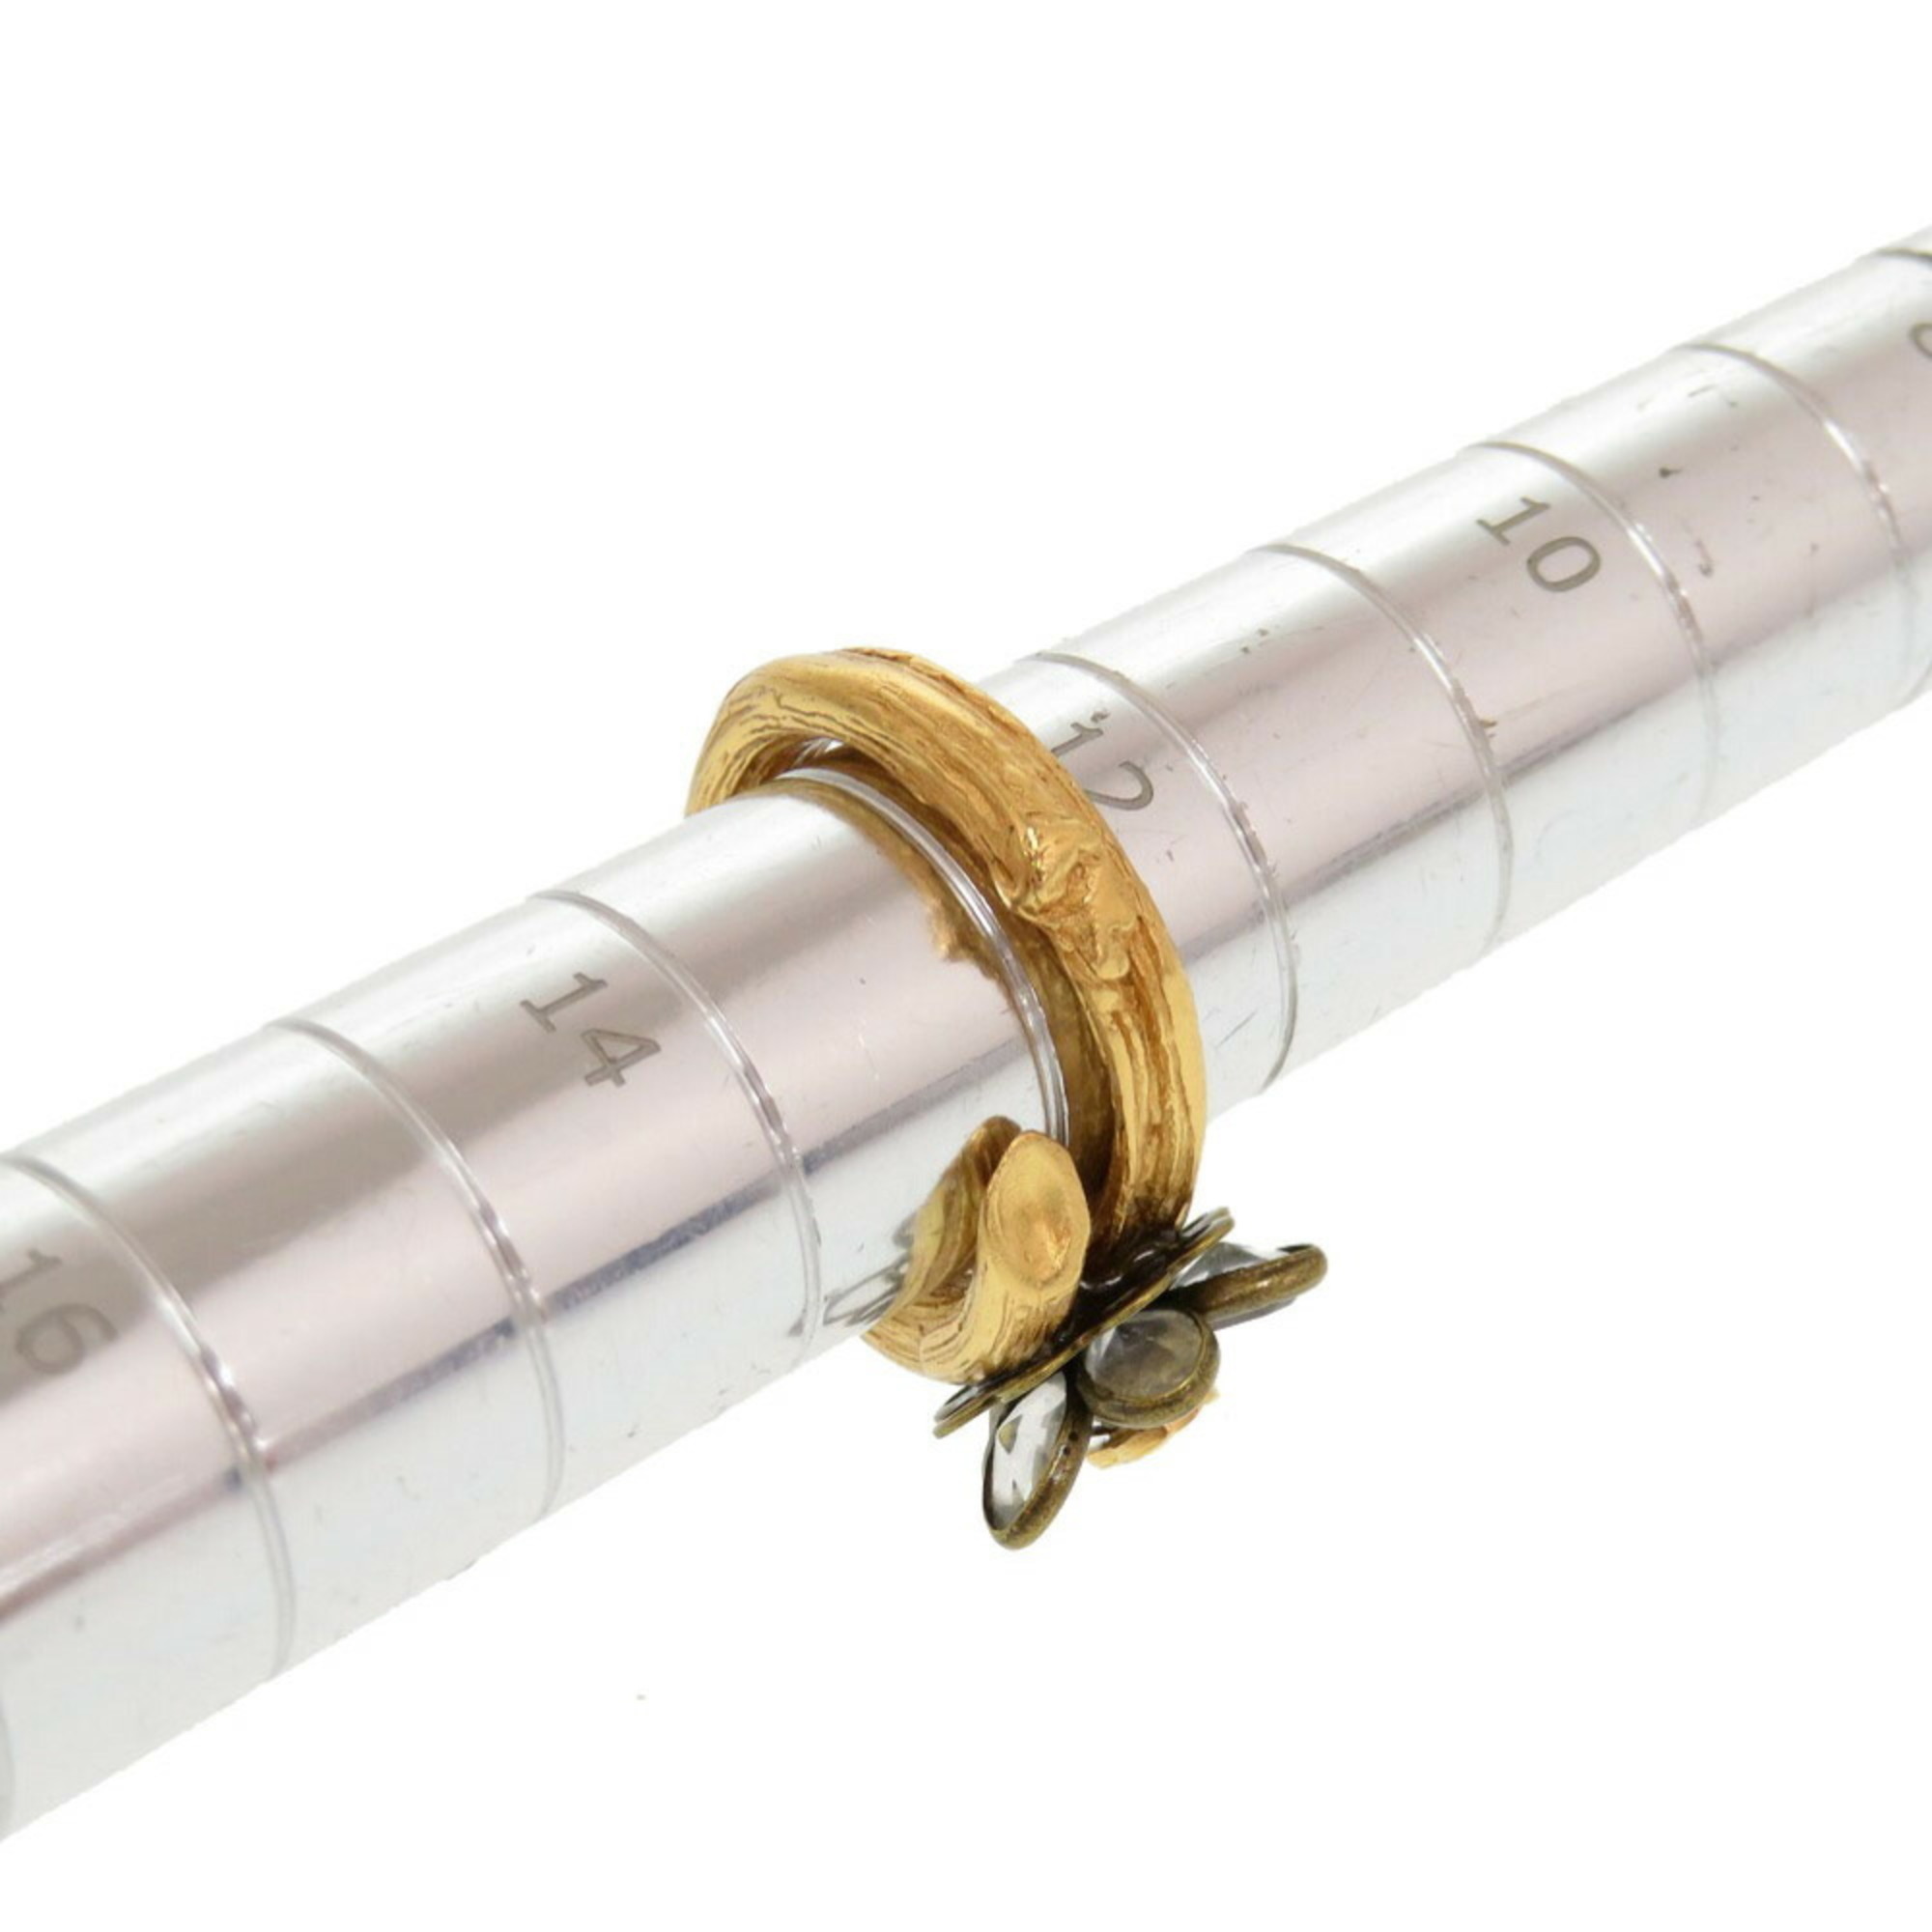 Chanel Flower Motif Coco Mark Rhinestone Gold Ring Size 13 0144 CHANEL